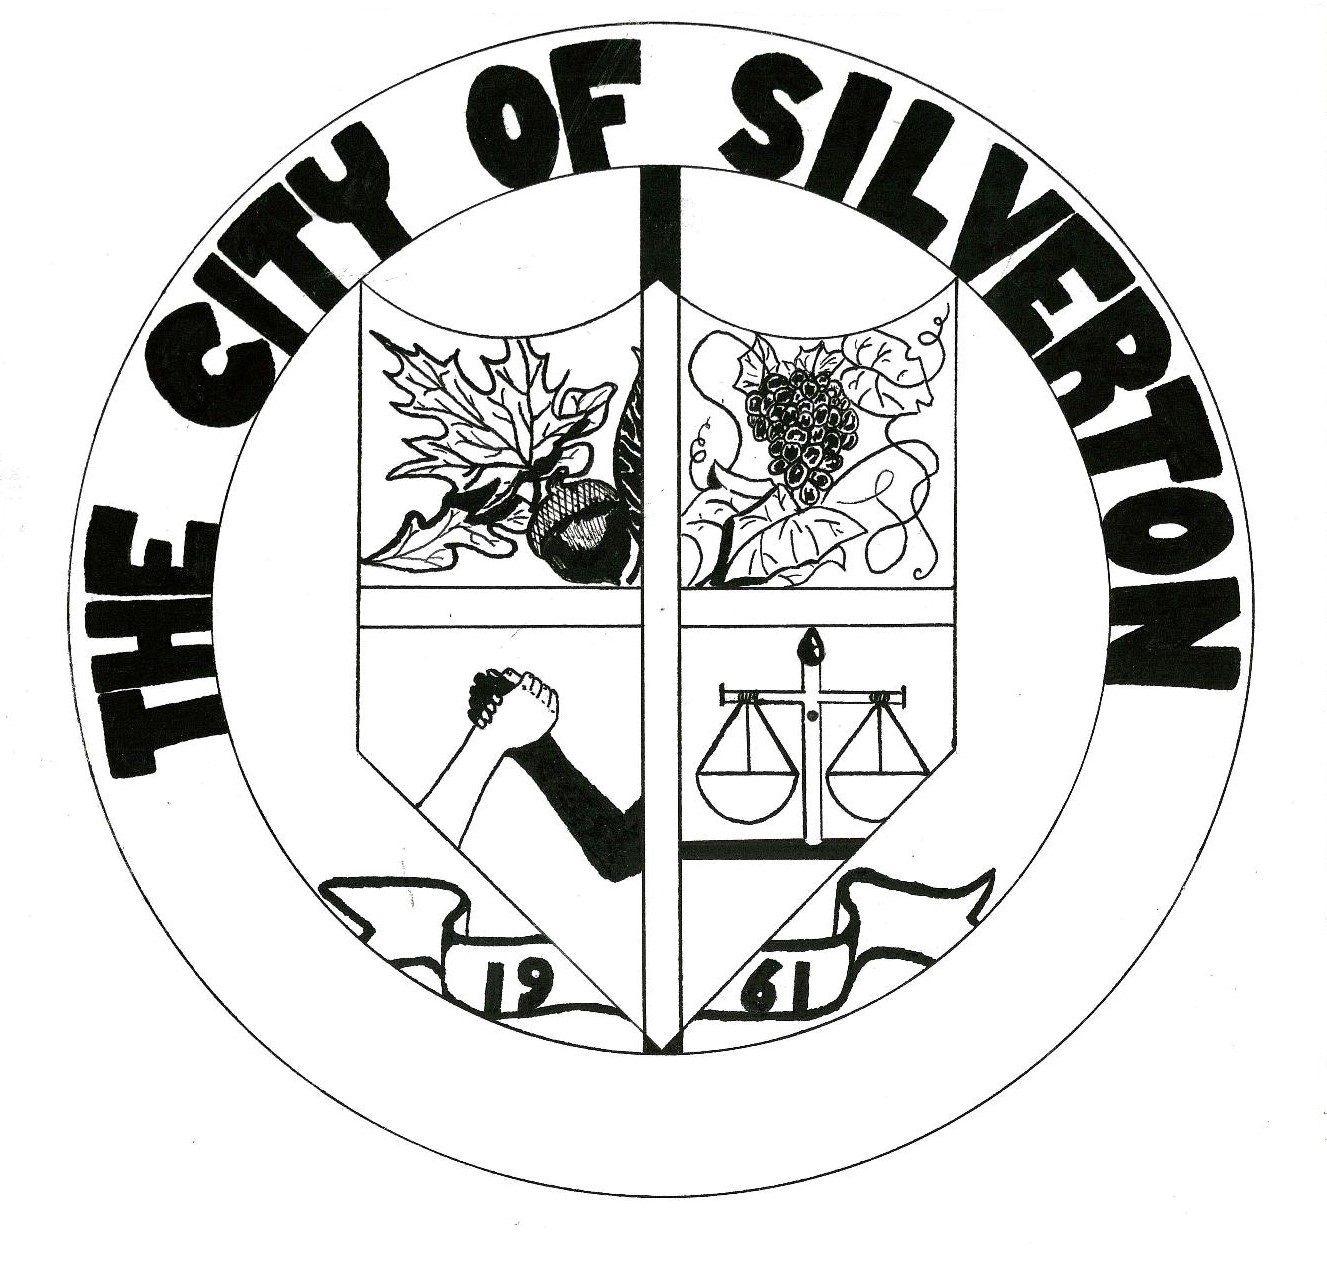 Silverton Logo - Silverton Logo and its History